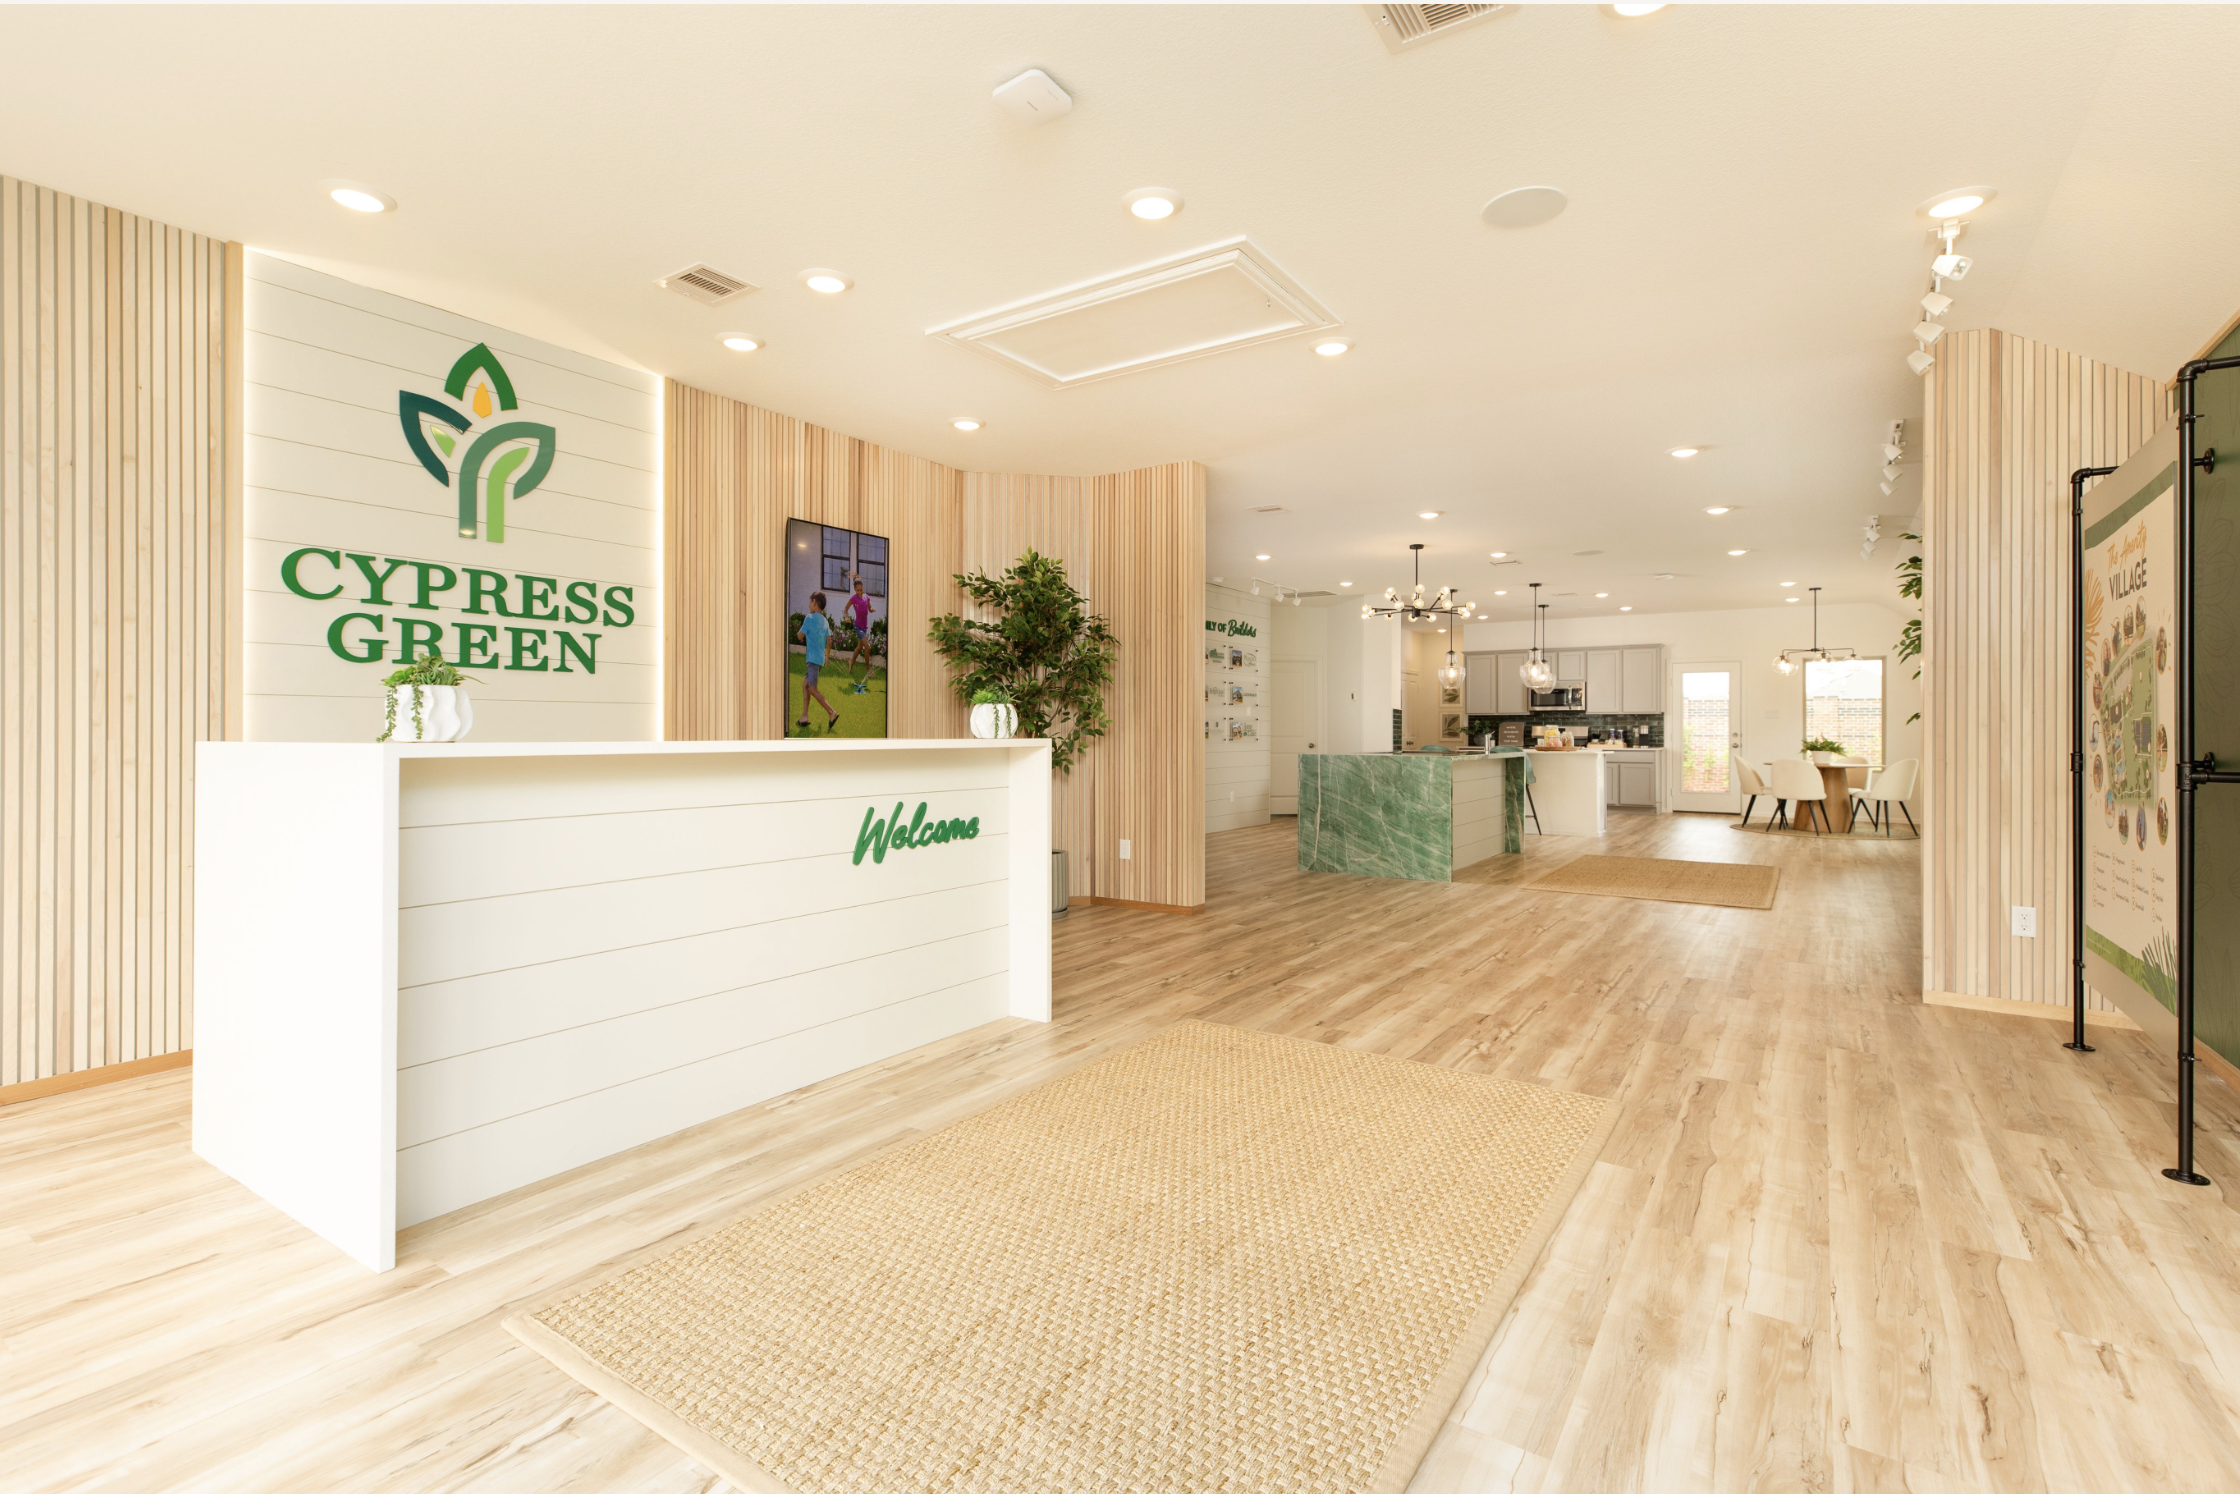 Cypress Green Information Center